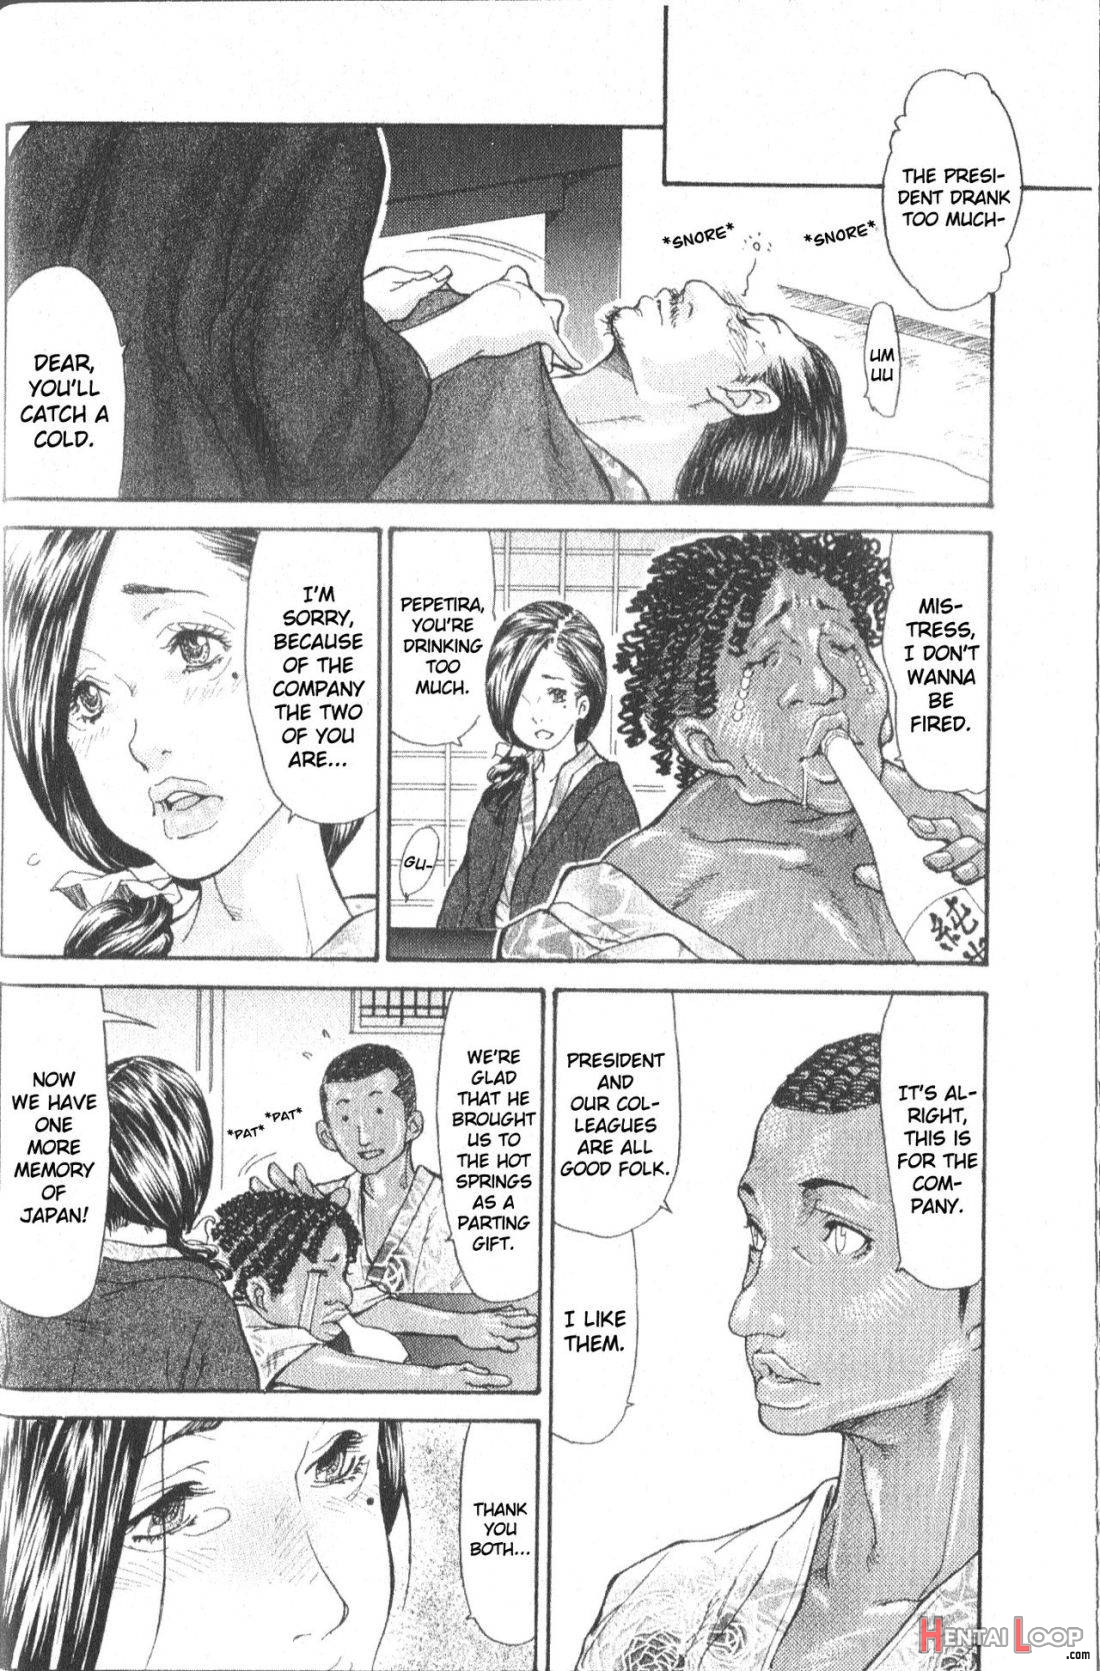 Nippon no omoide page 4